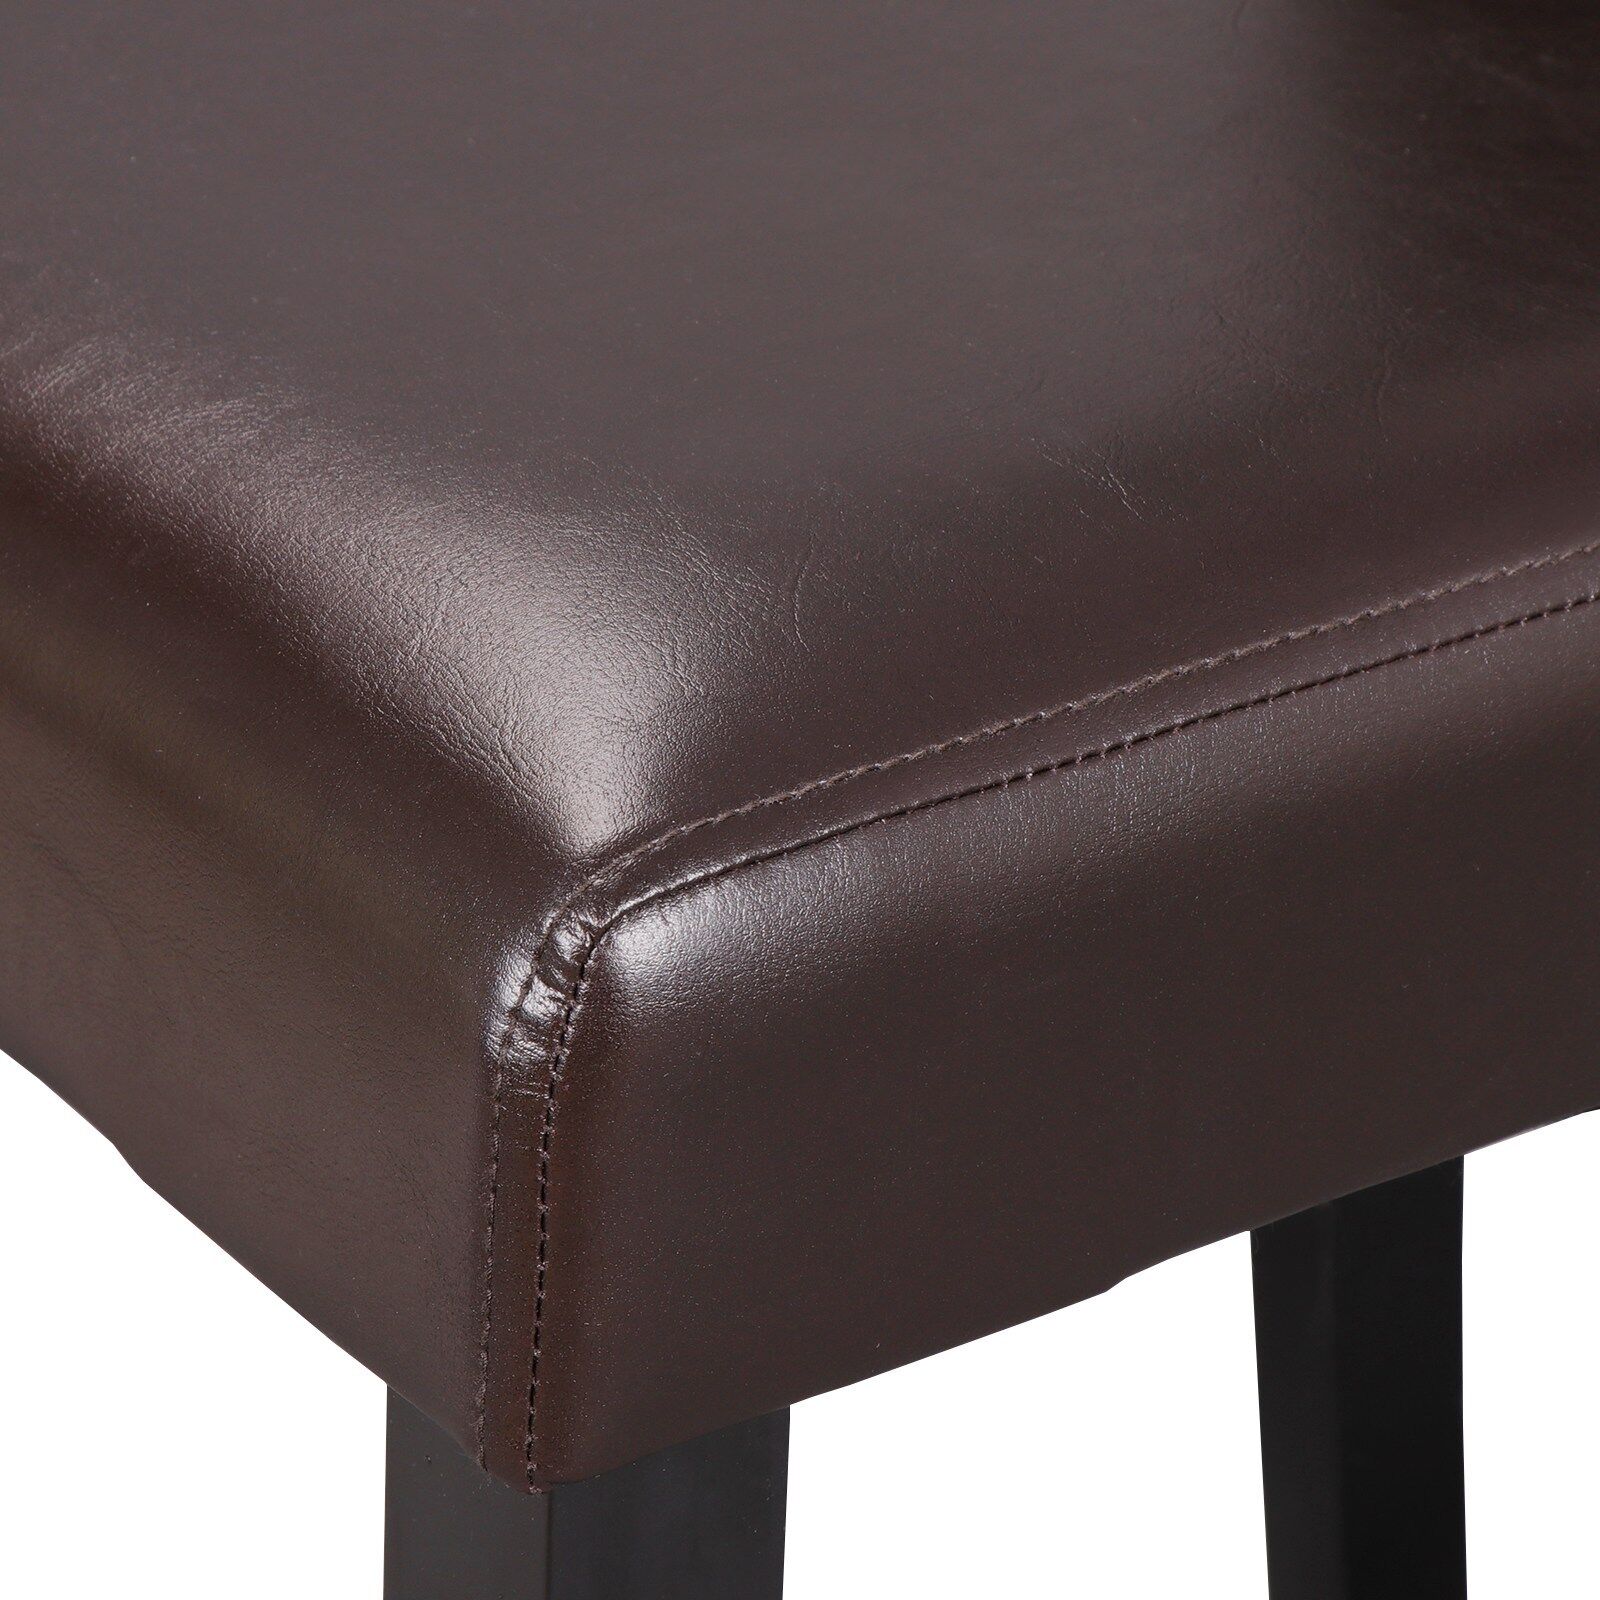 thinkstar Set Of 6 Dining Room Parson Chairs Kitchen Formal Elegant Leather Design Brown